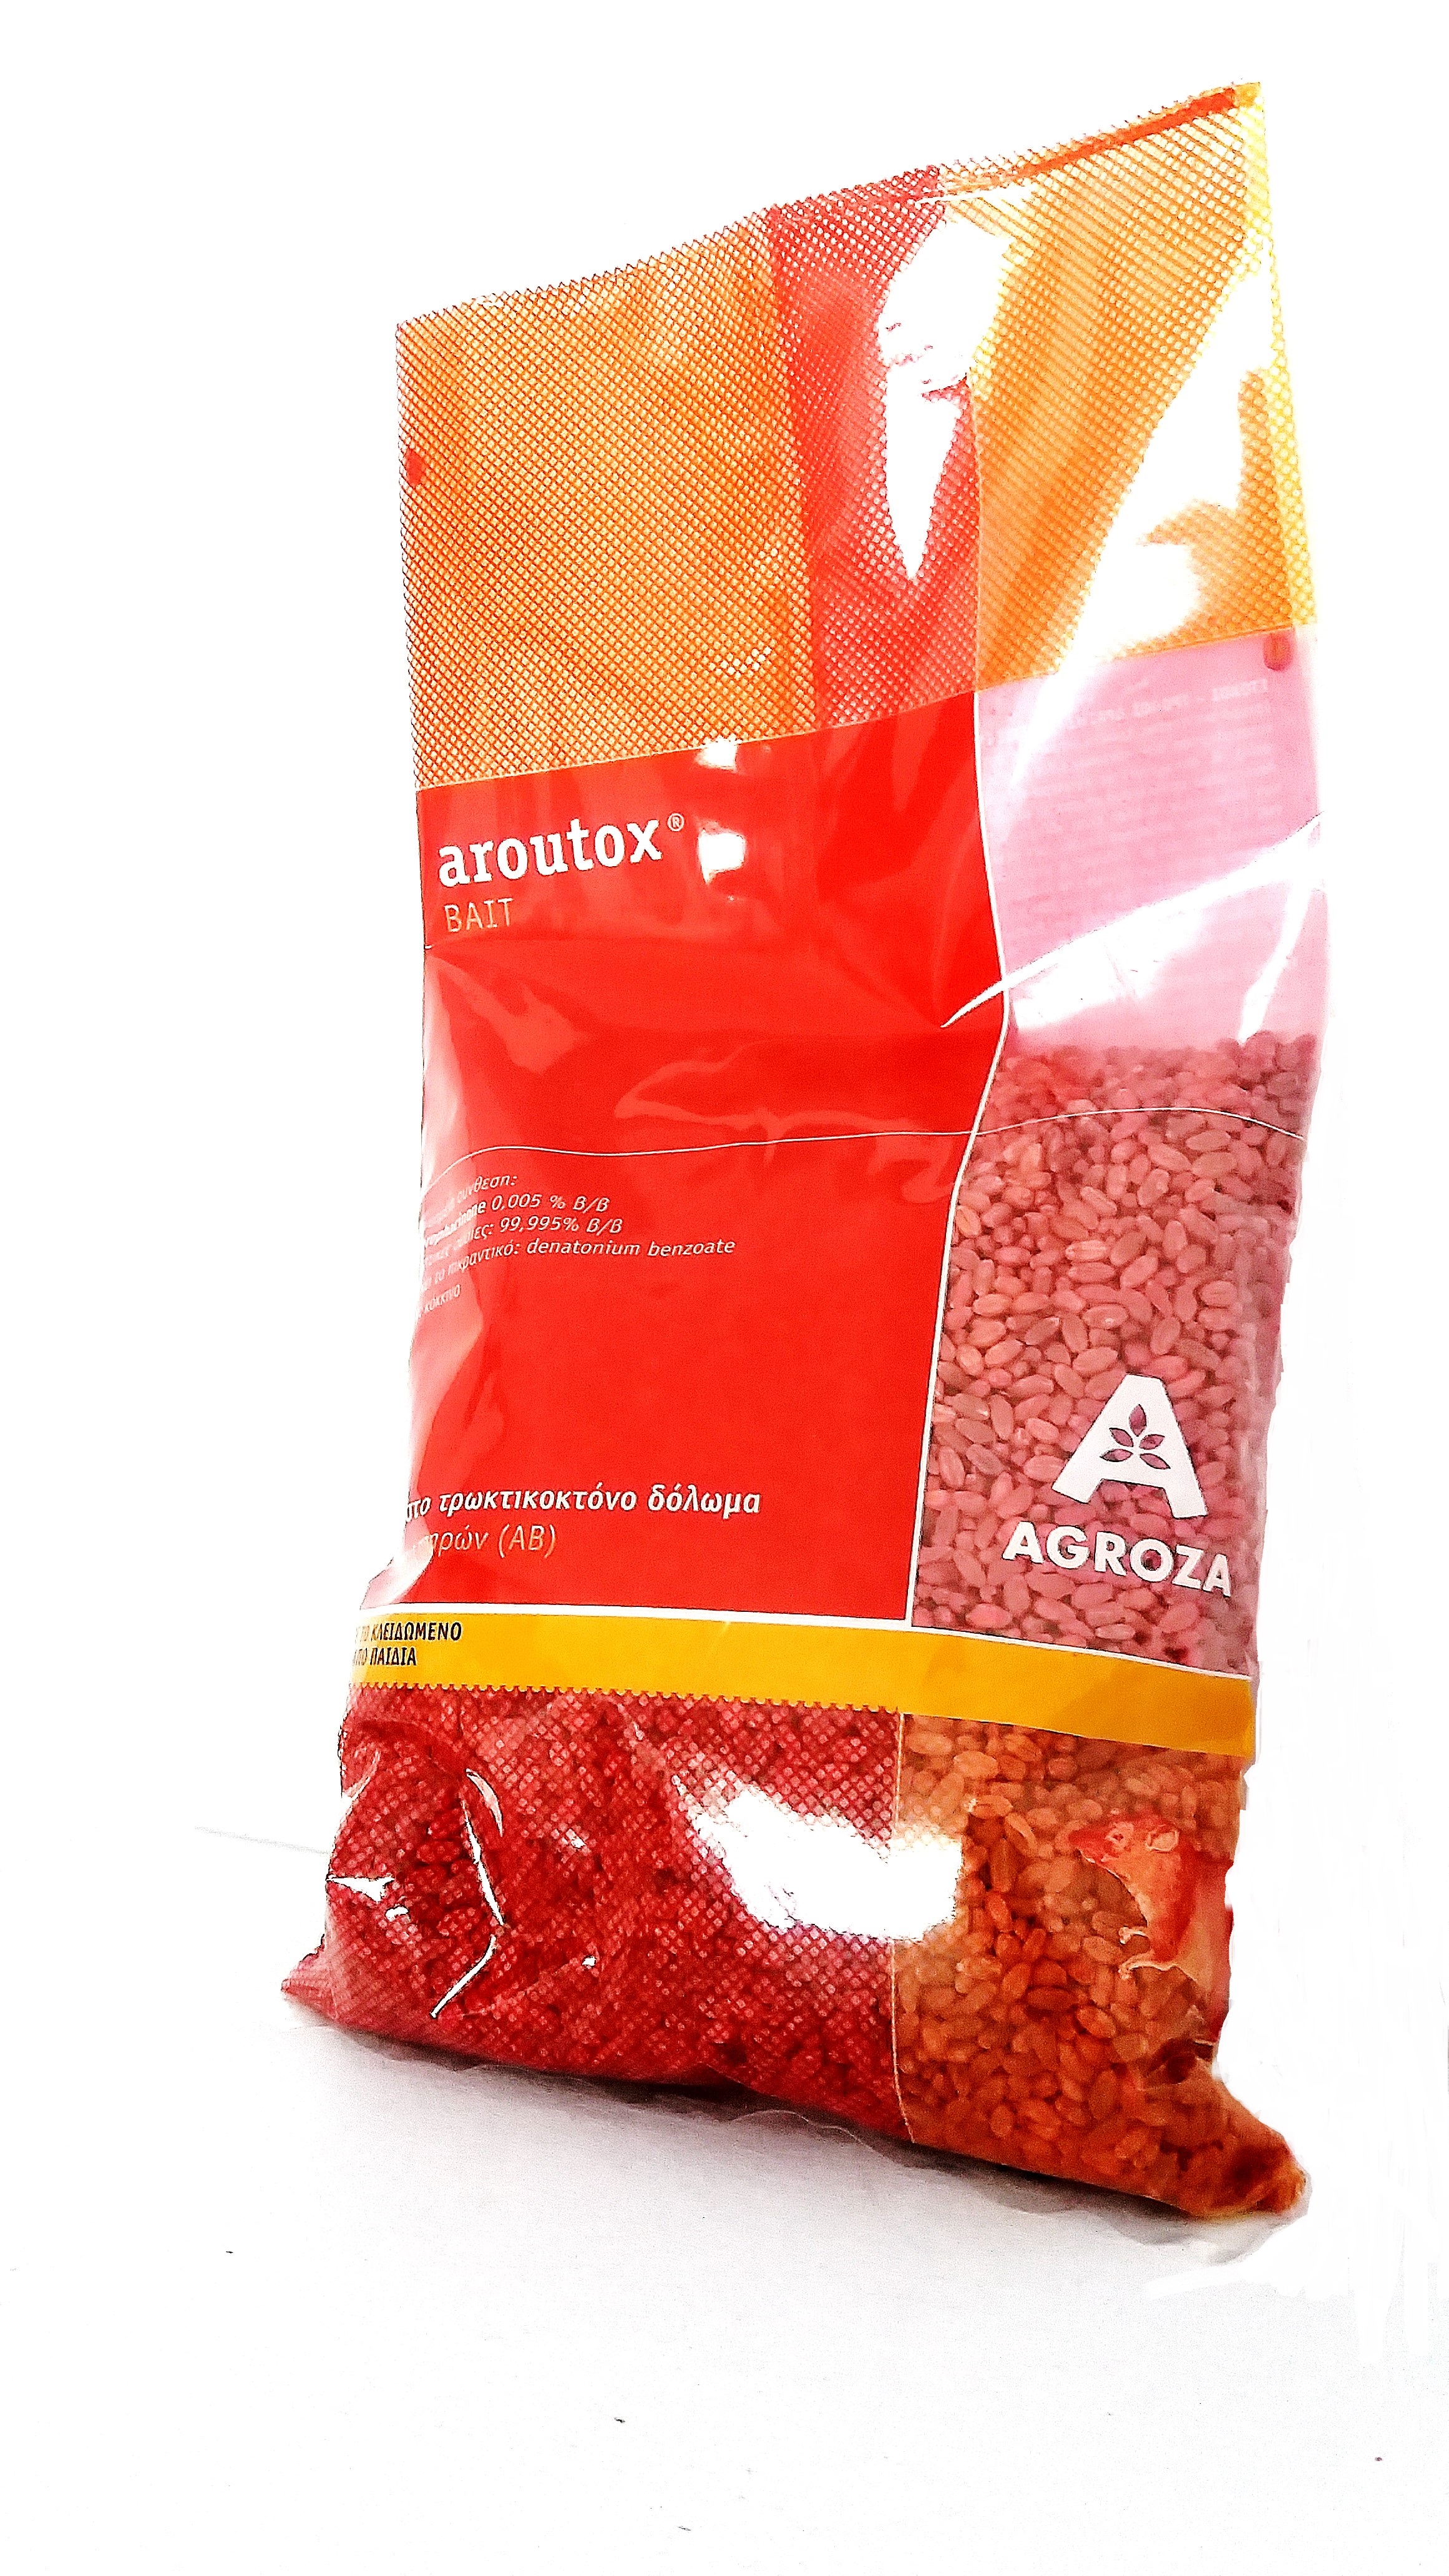 Aroutox Bait (σιτάρι), 1 kg